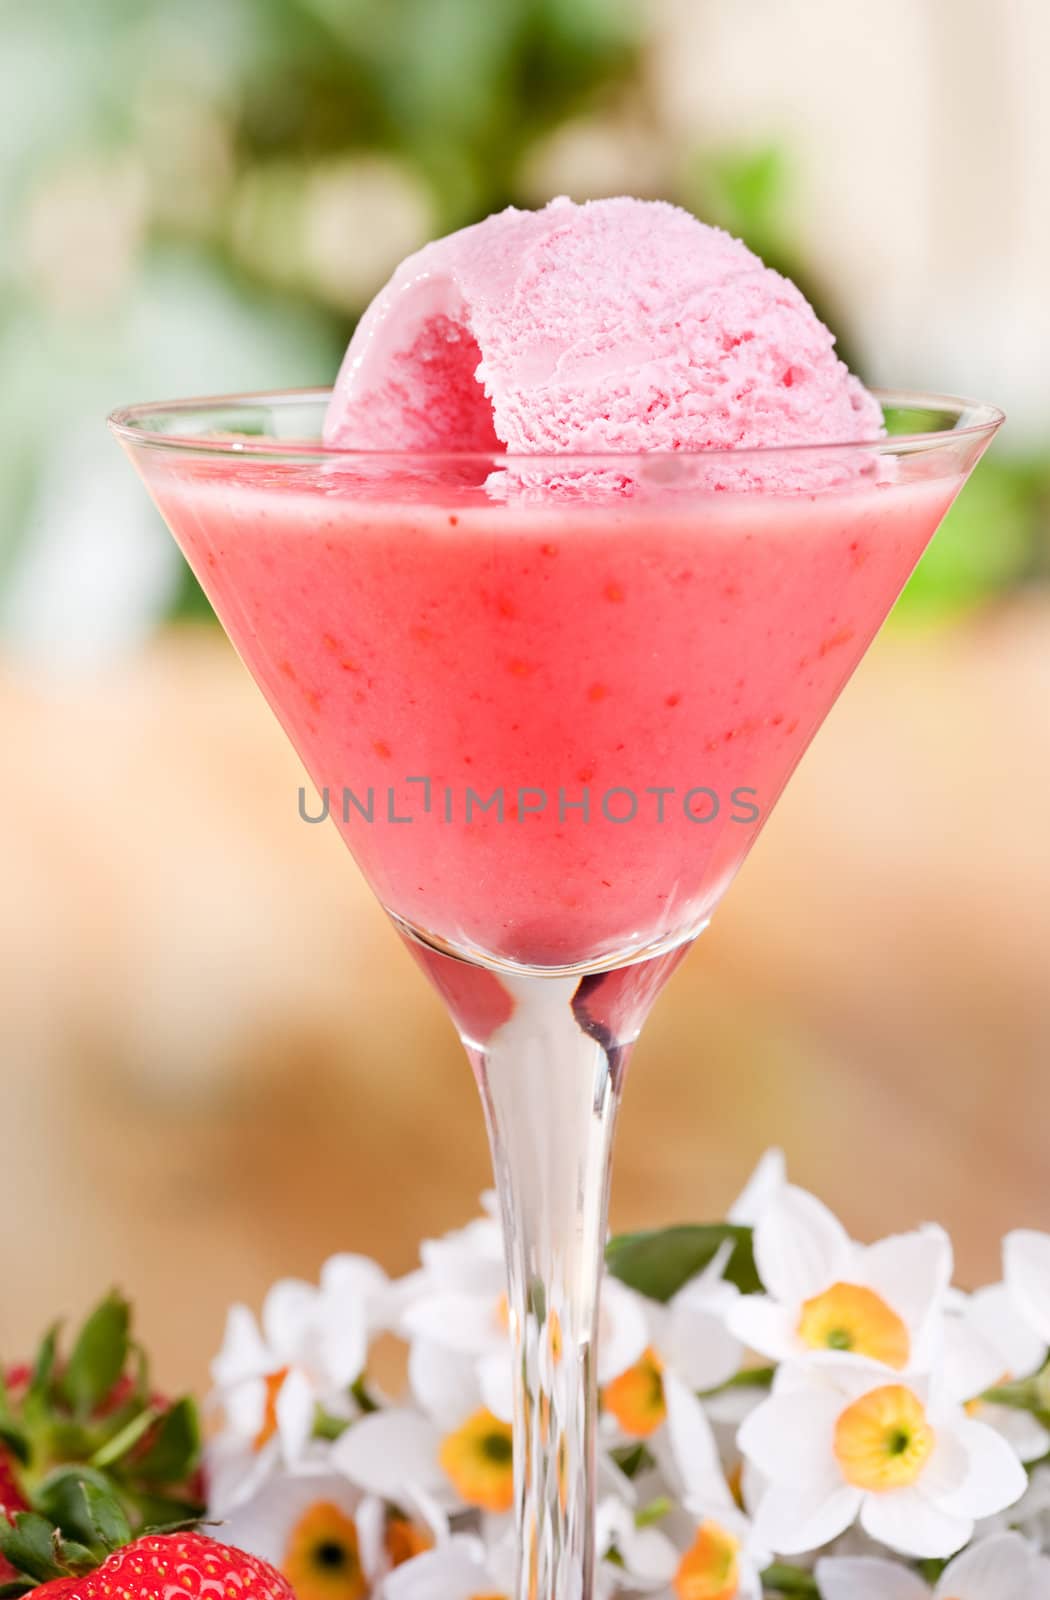 A summer treat - strawberry ice cream smoothie